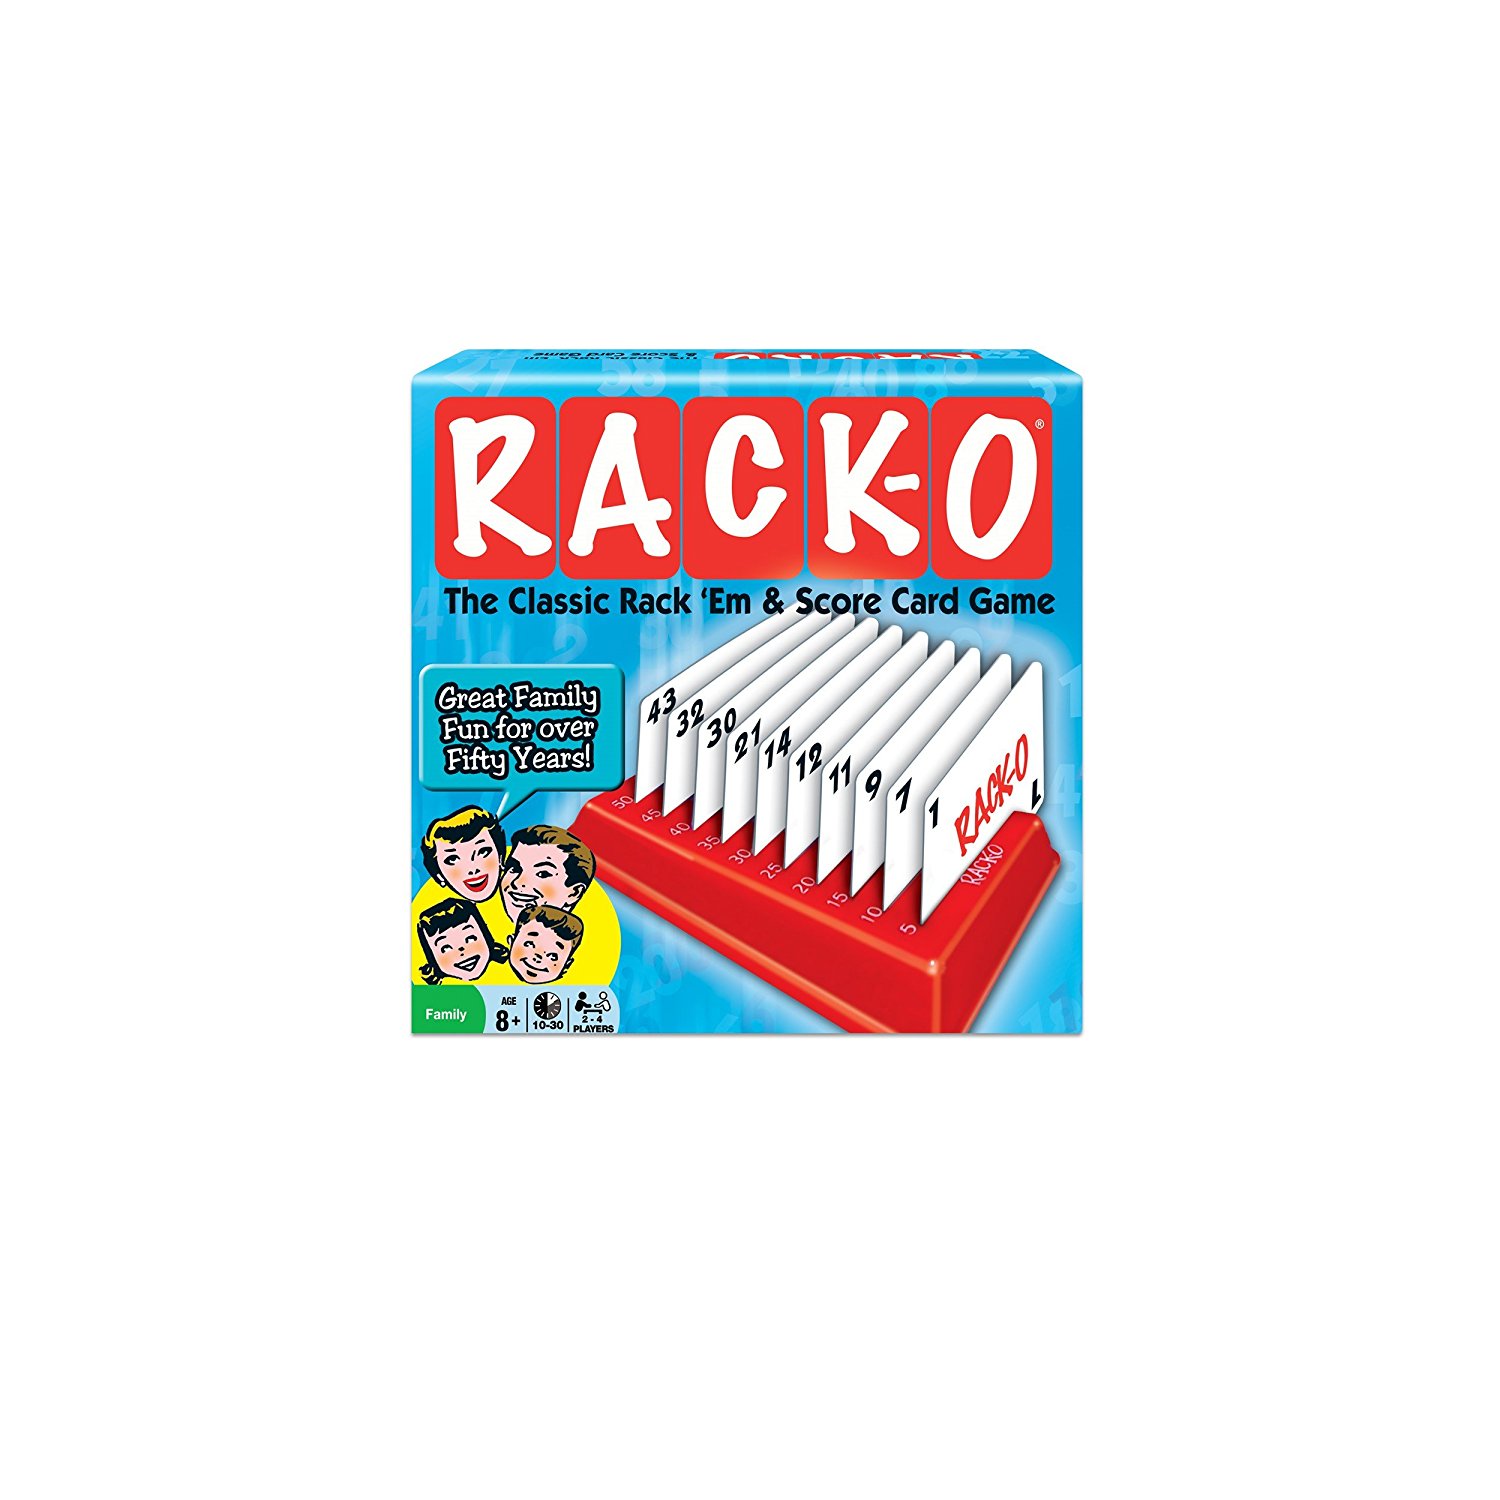 Racko game target